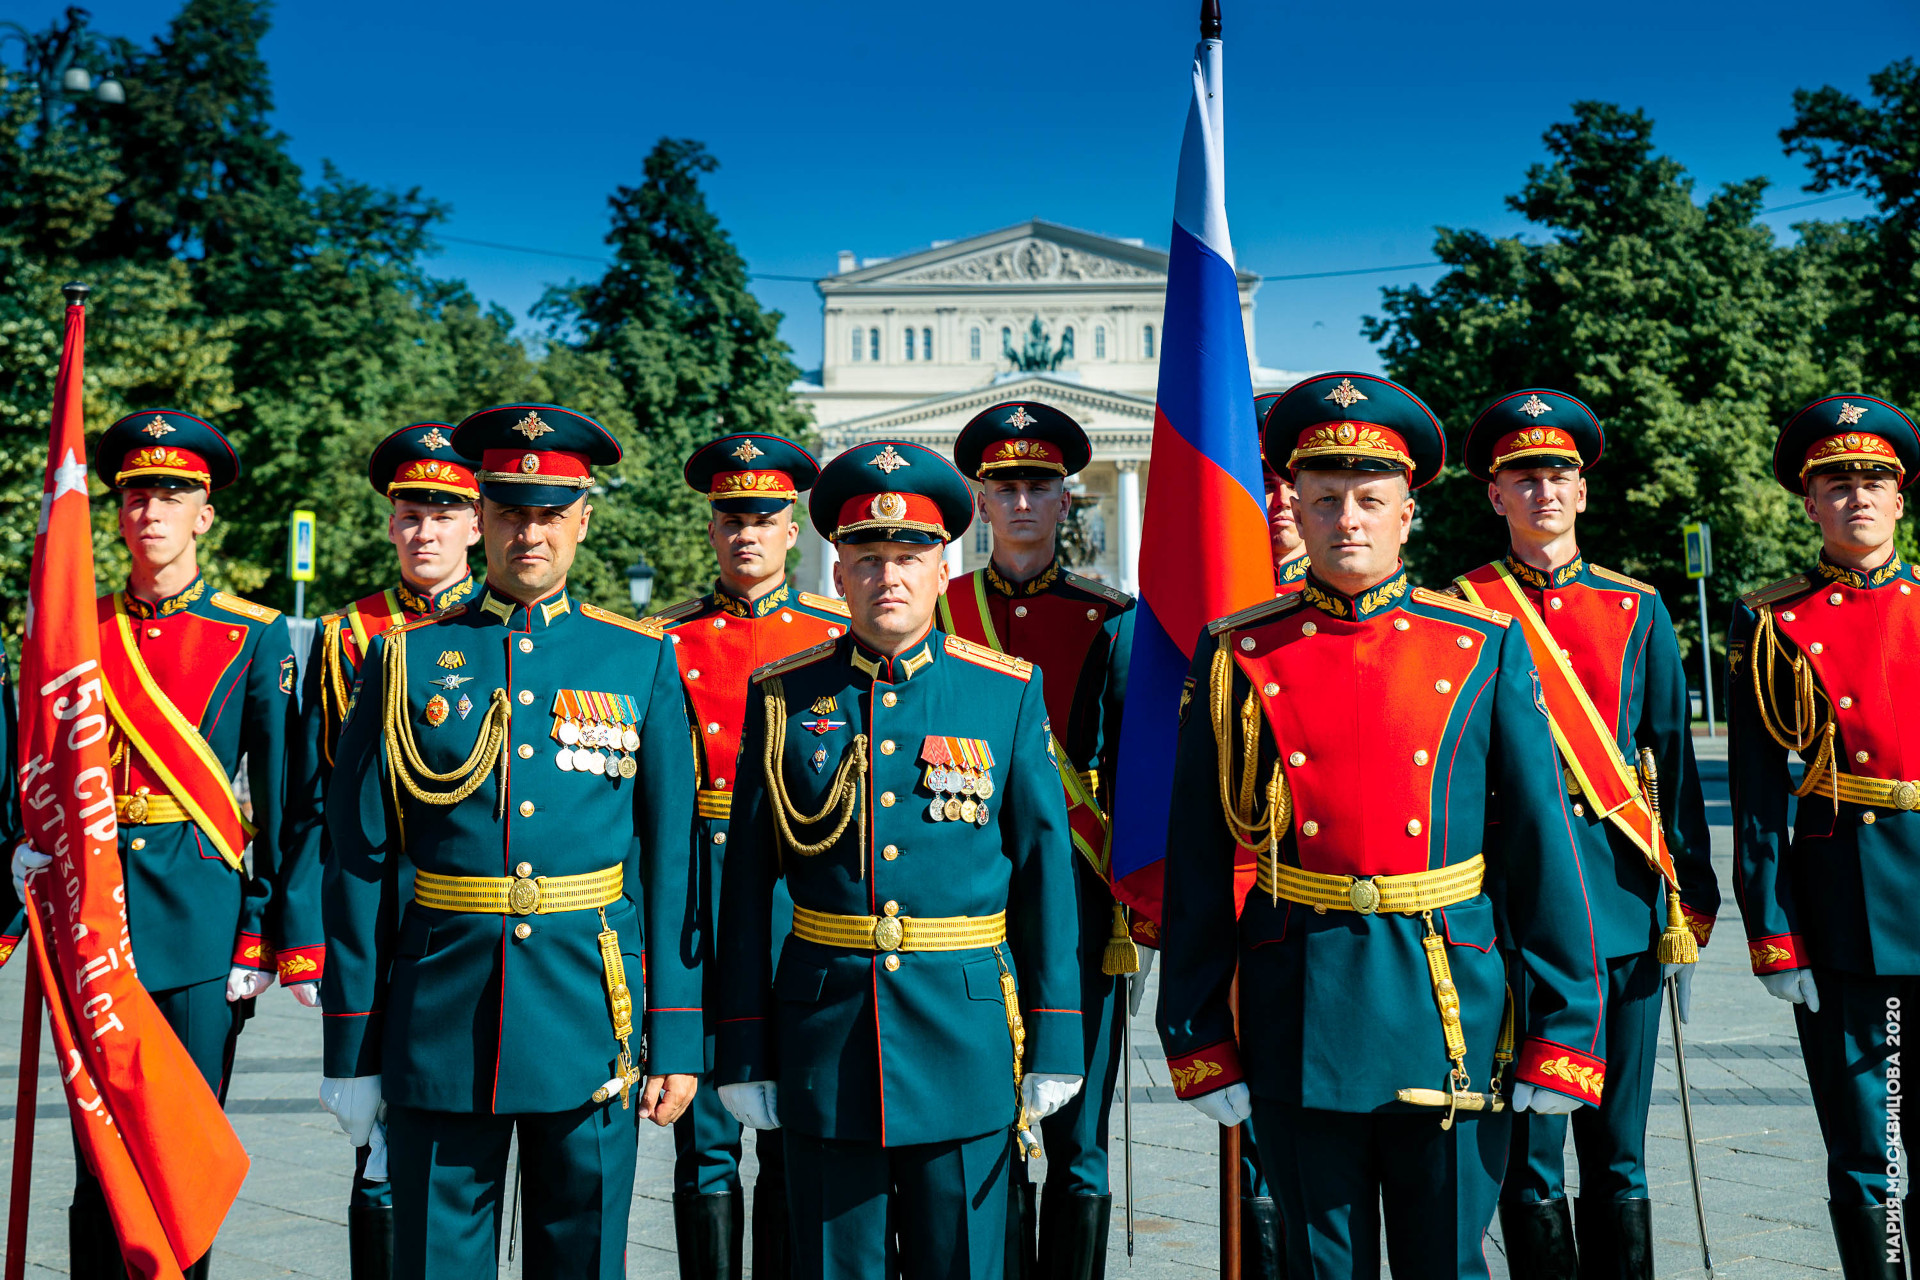 РПК рота почетного караула Преображенского полка